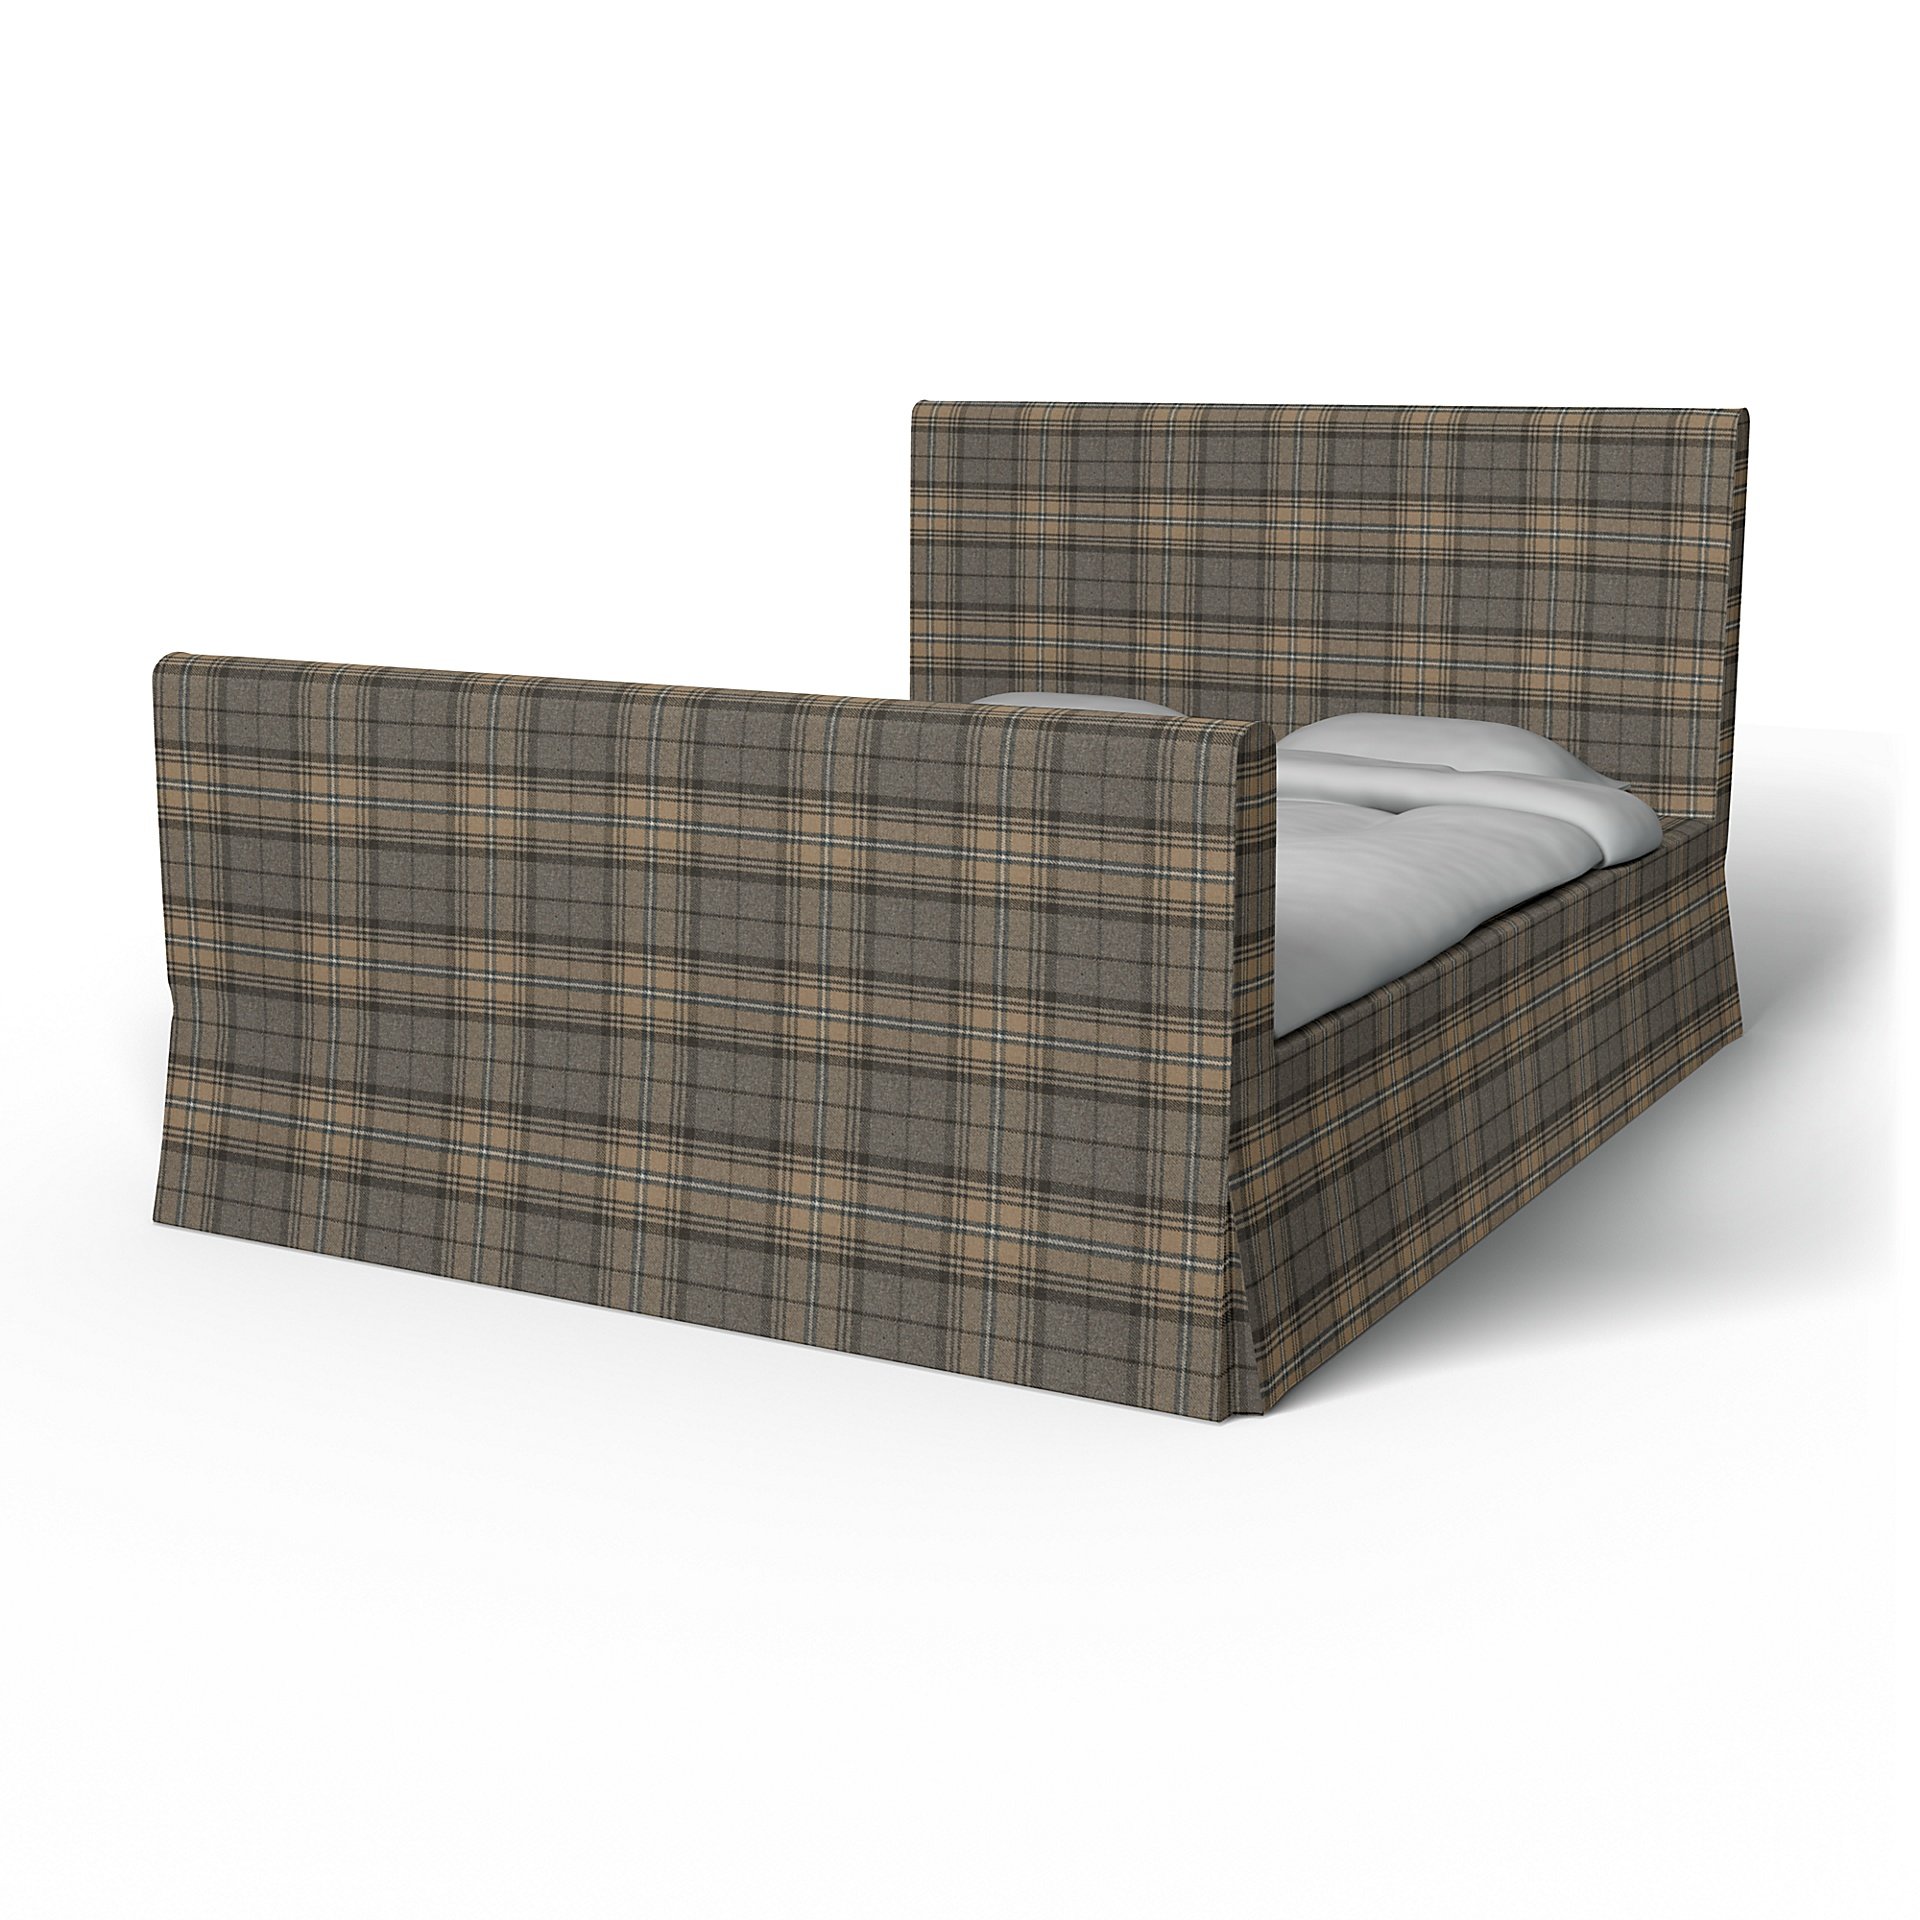 IKEA - Floro Bed Frame Cover, Bark Brown, Wool - Bemz